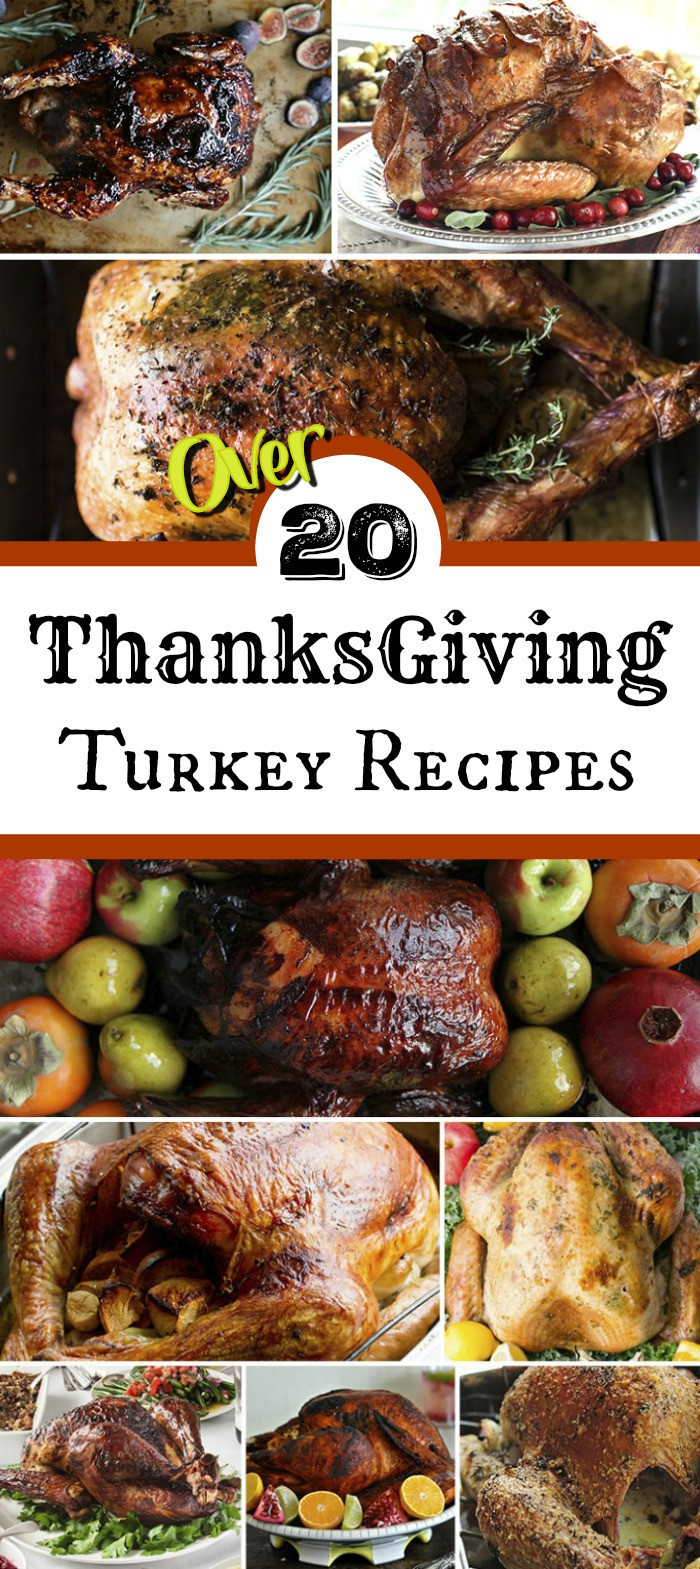 Turkey Recipe For Thanksgiving Dinner
 Thanksgiving Turkey Recipes for the Best Thanksgiving